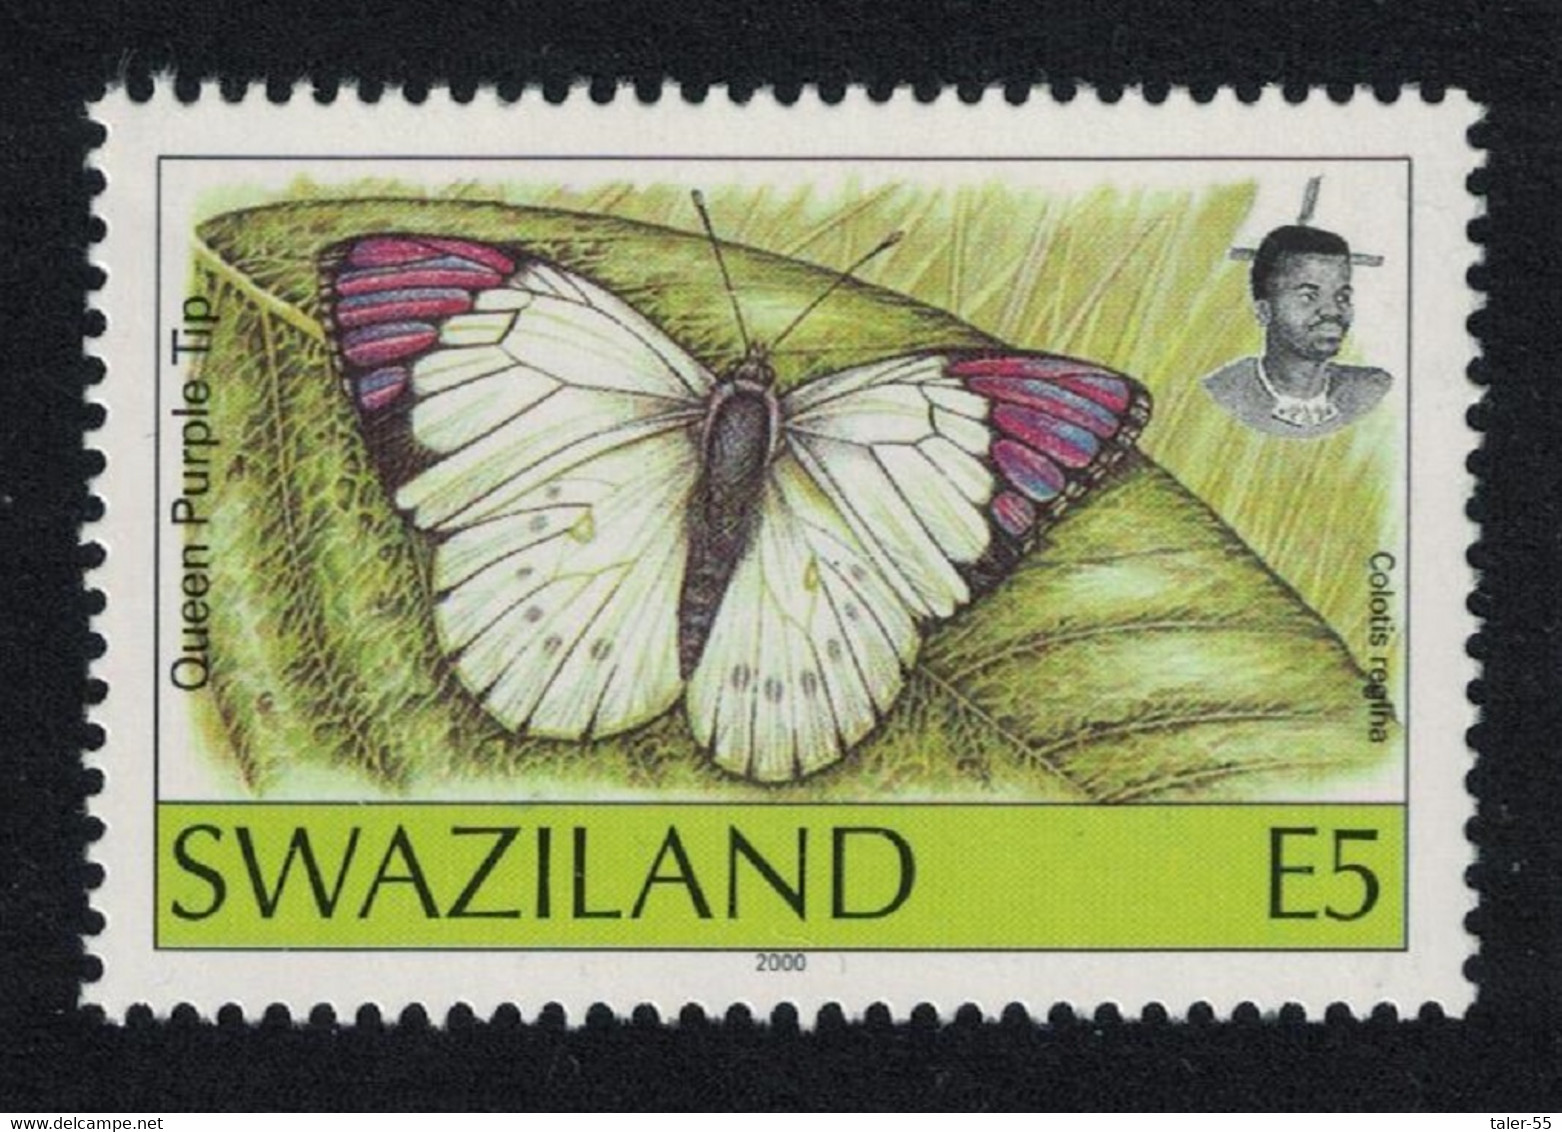 Swaziland Butterfly 'Cololis Regina' E5 Imprint '2000' MNH SG#618 - Swaziland (1968-...)